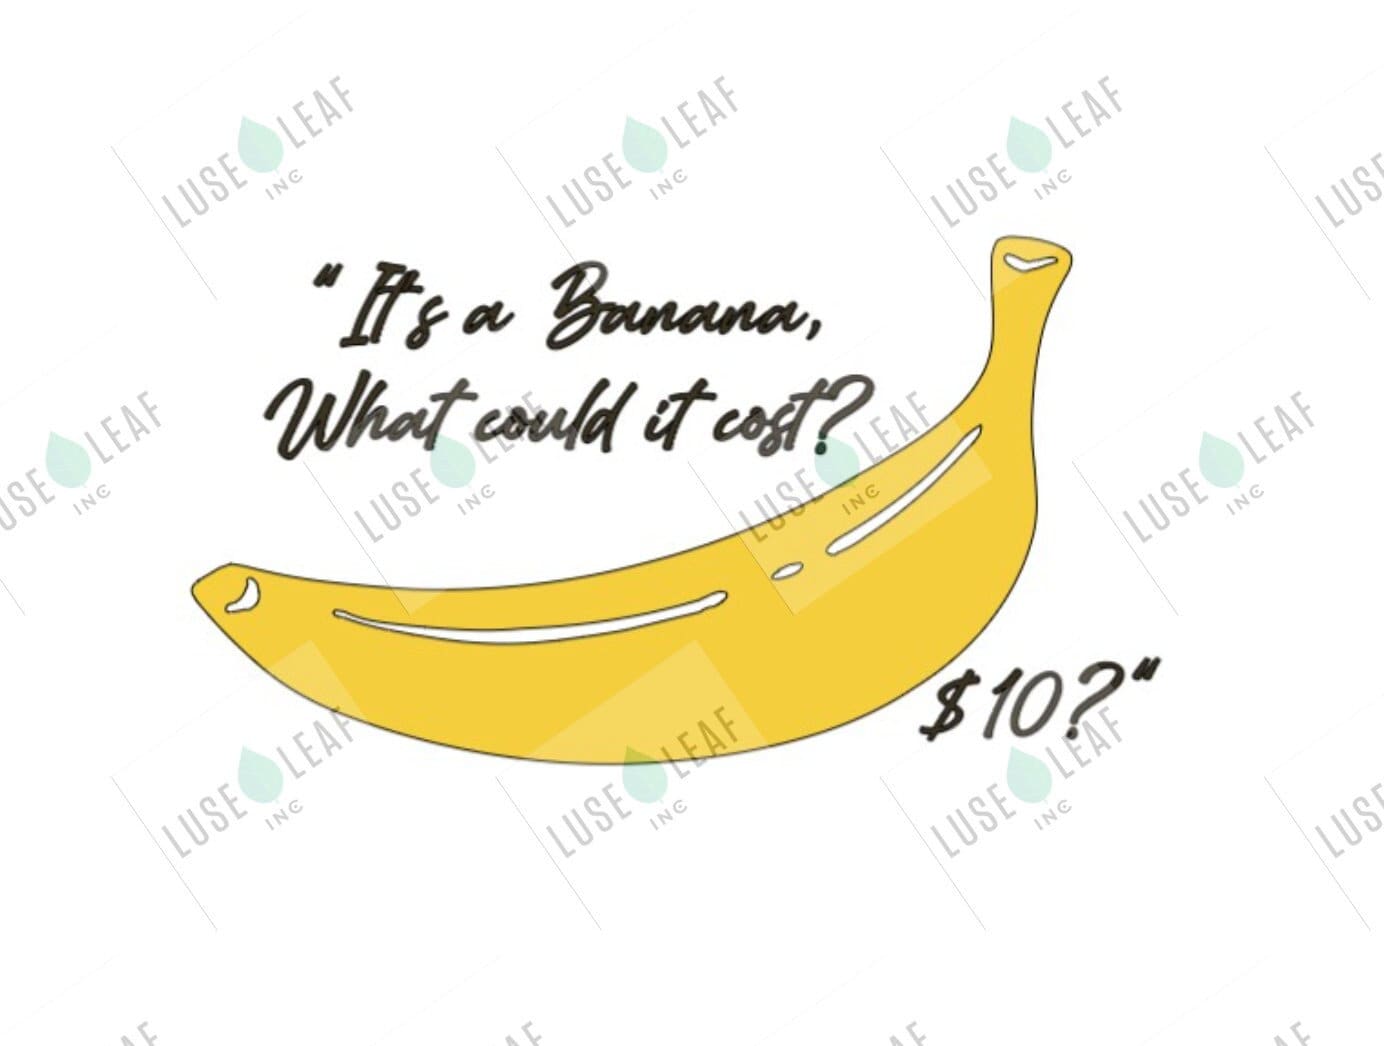 It's Bananas!